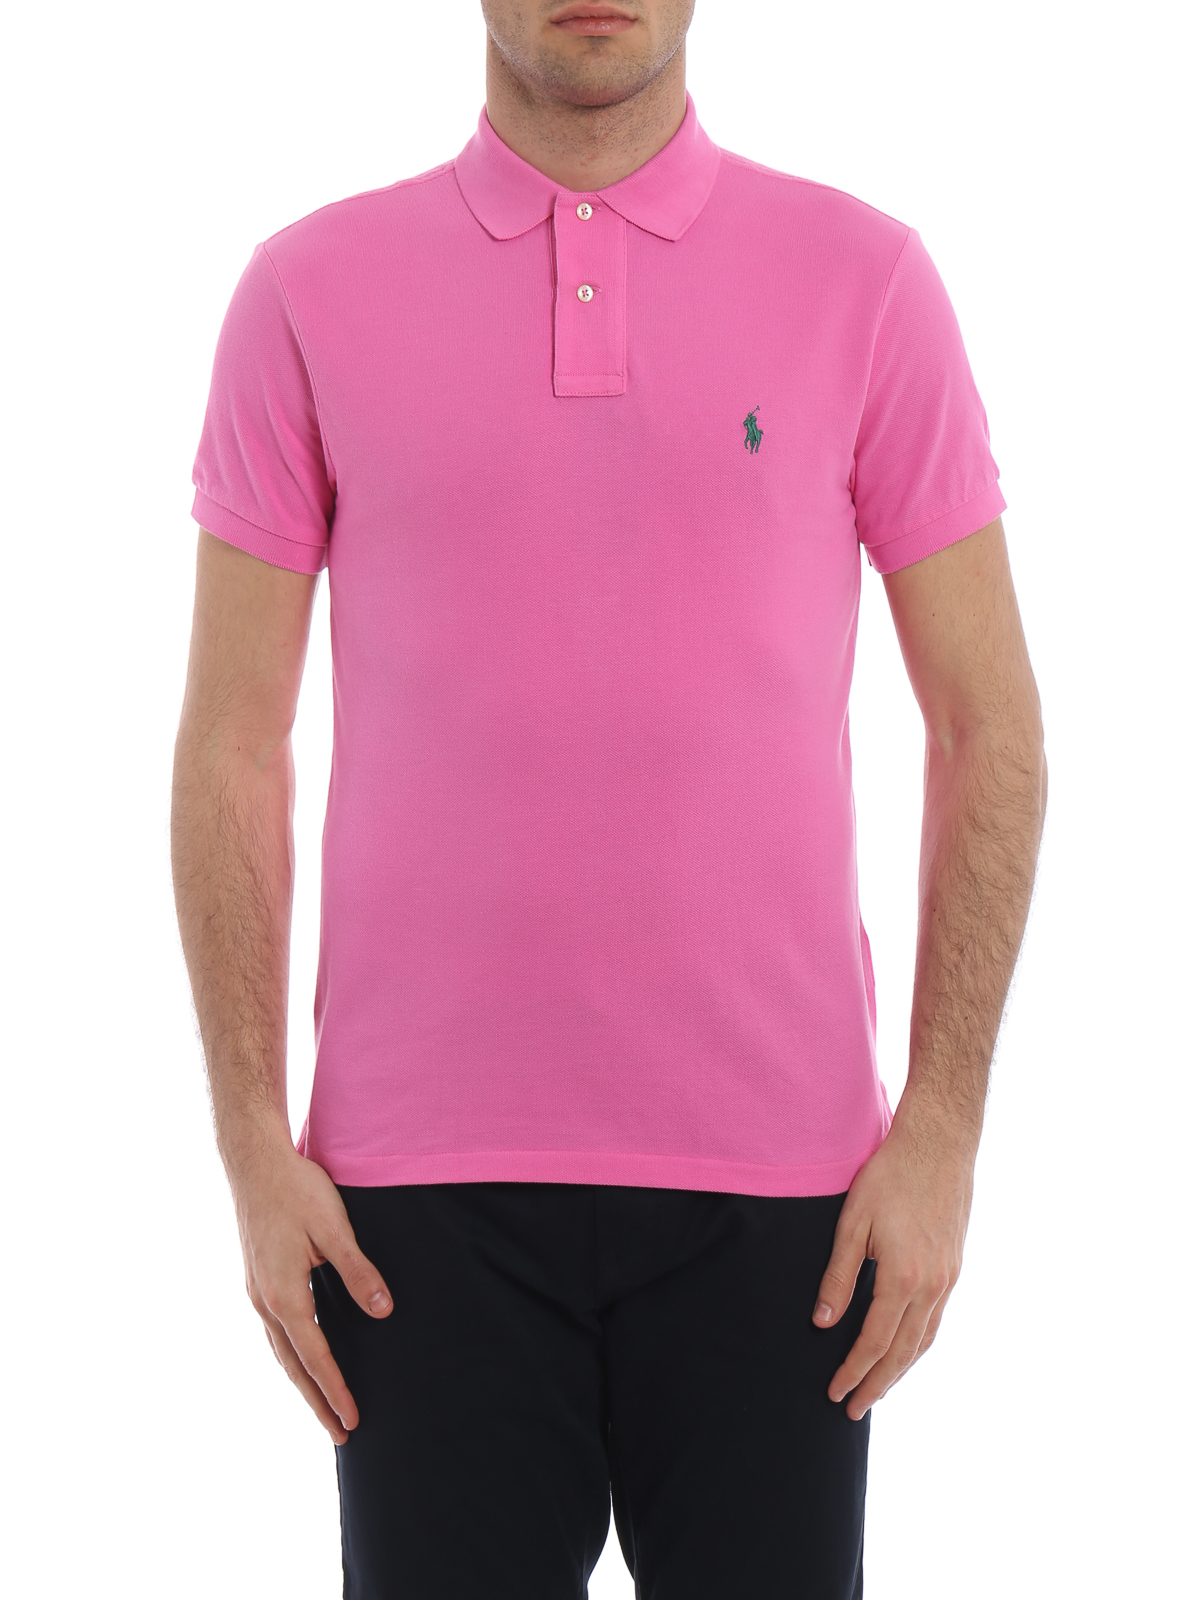 Polo shirts Polo Ralph Lauren - Classic pink polo shirt in pique cotton -  710536856090